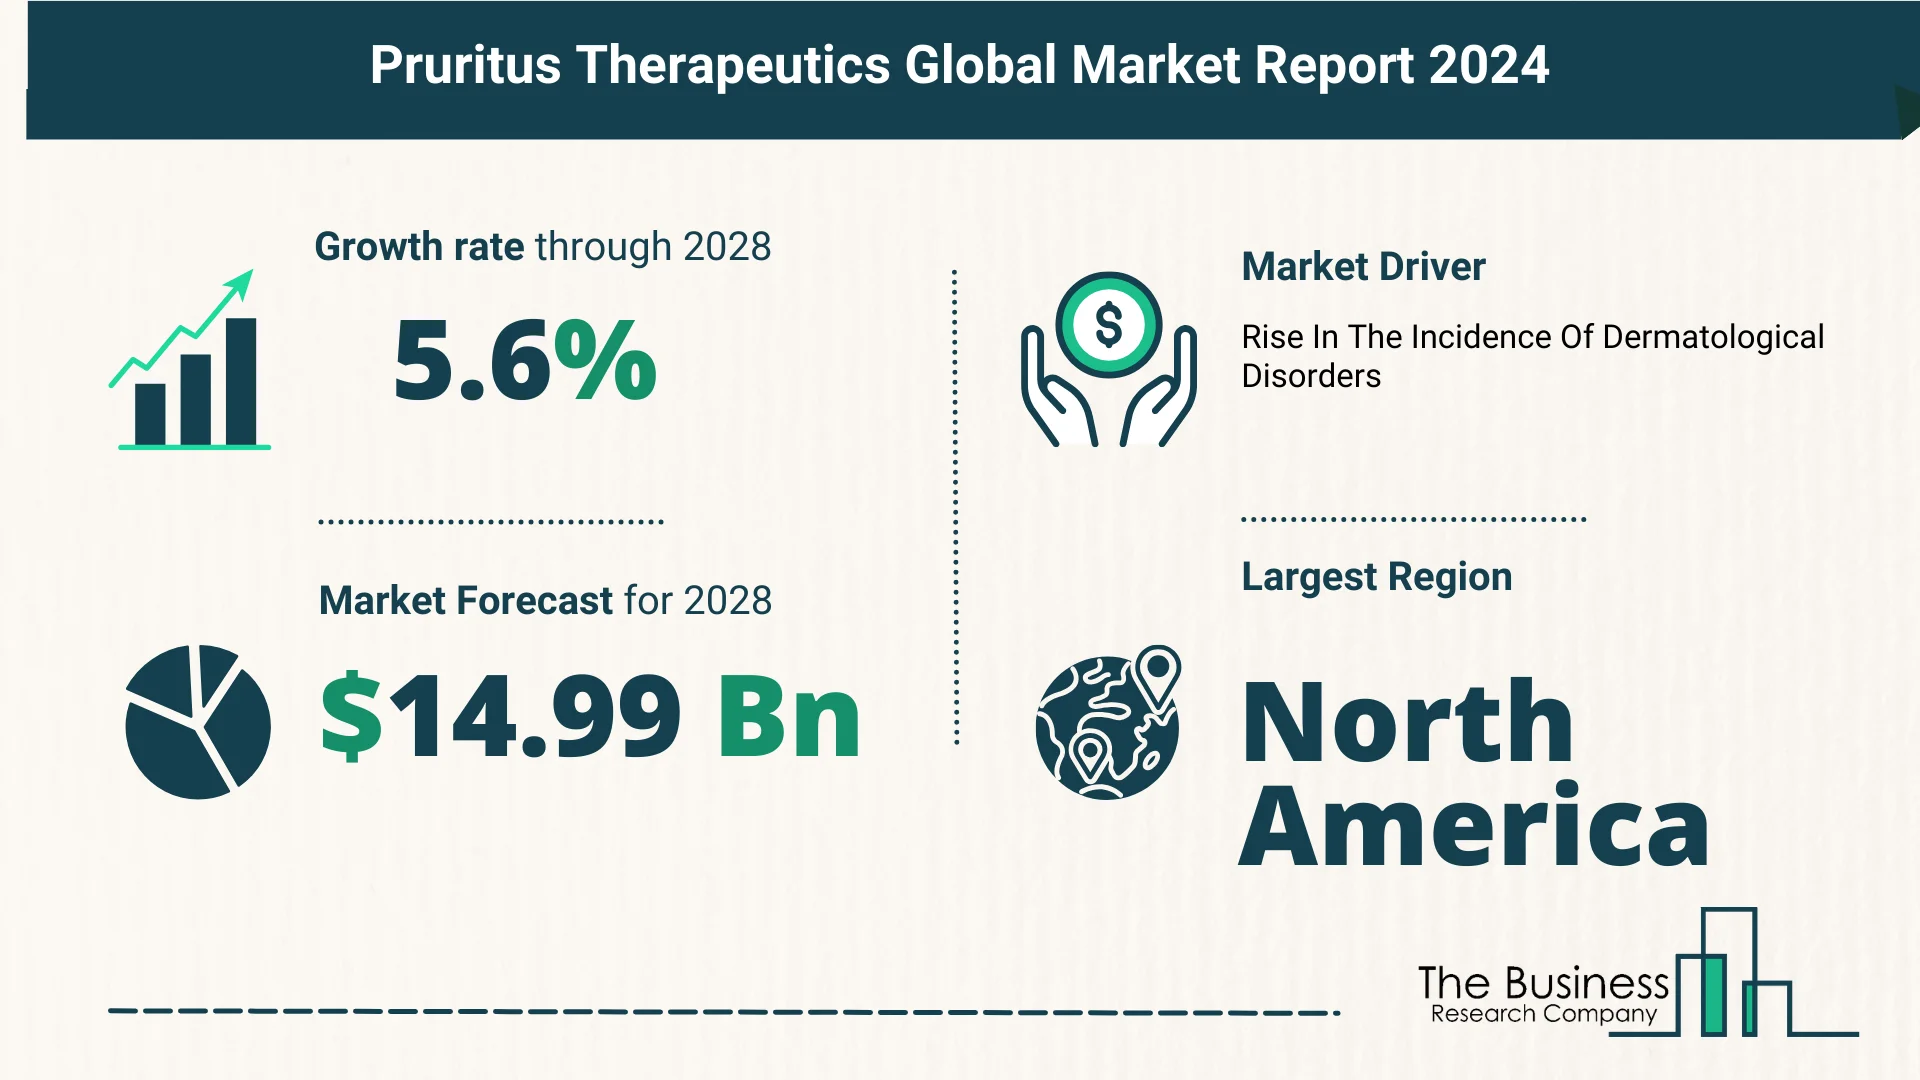 Global Pruritus Therapeutics Market Size